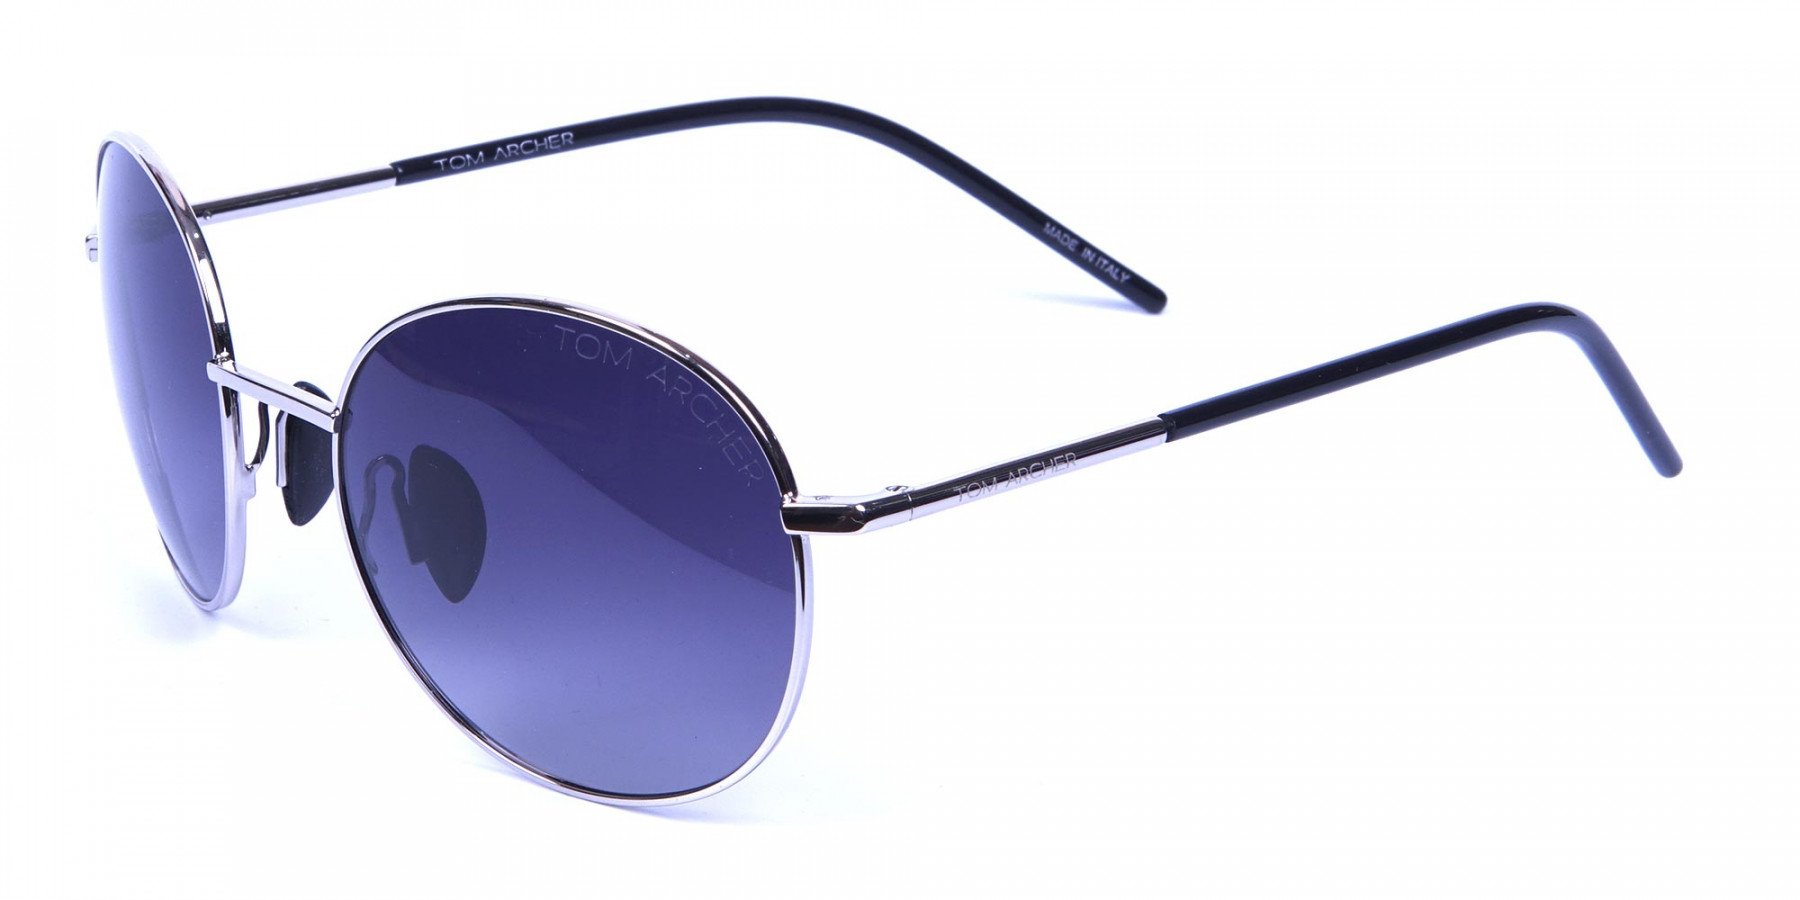 Silver Sunglasses Round Frames